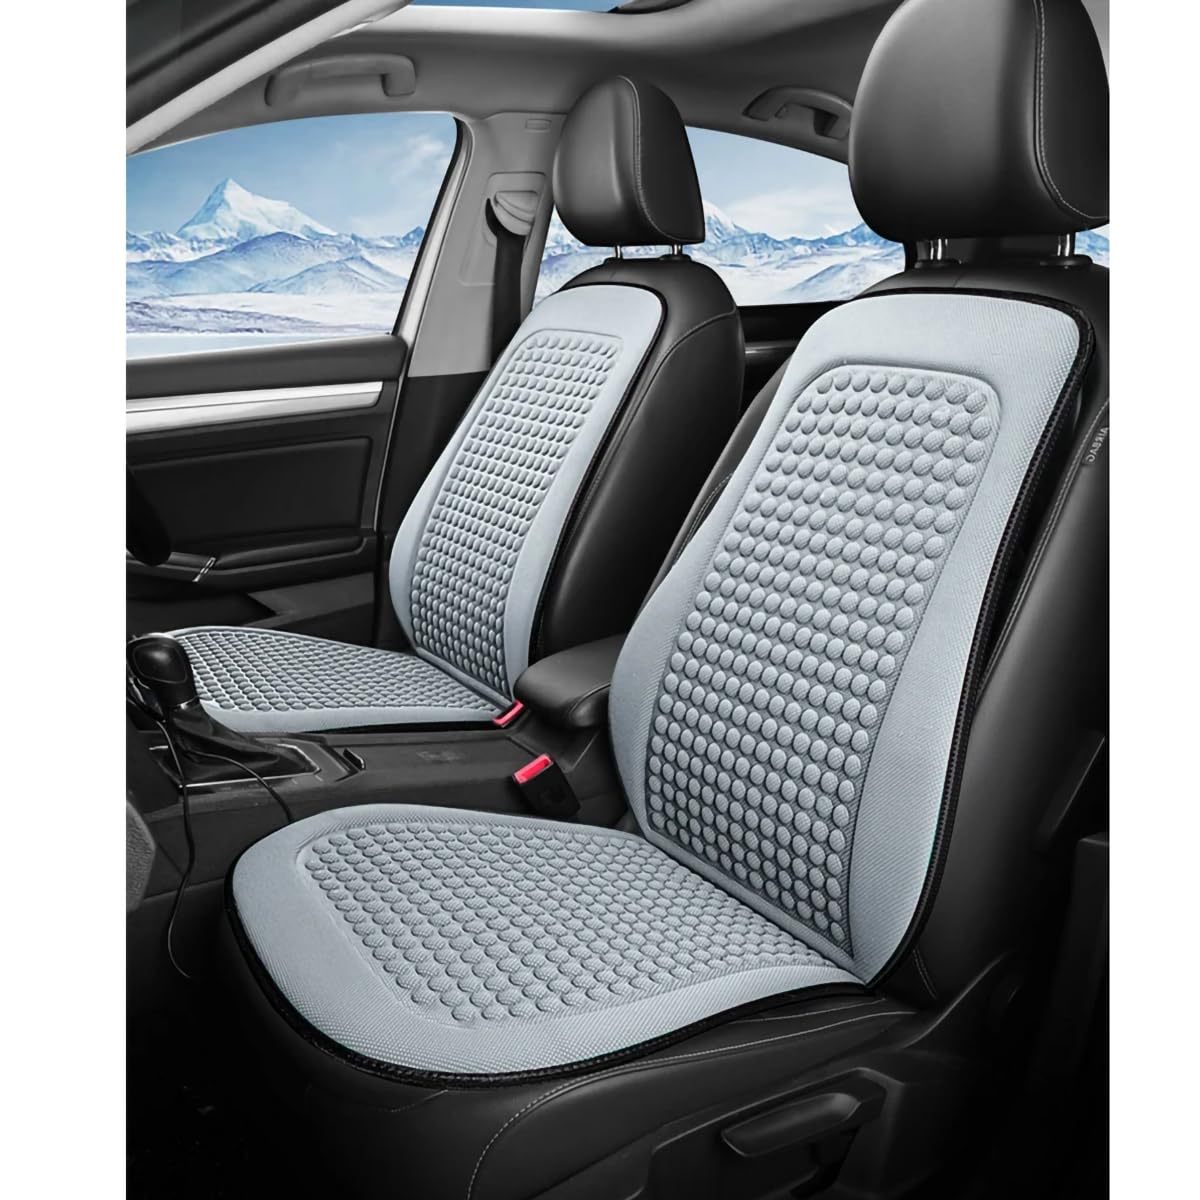 Spulhc Autositzbezug für SsangYong Rexton Y400 2018 2019 2020 5seat, kühles Sitzkissen aus Eisseide, kühlendes/atmungsaktives Kissen,A-gray-2 set von Spulhc